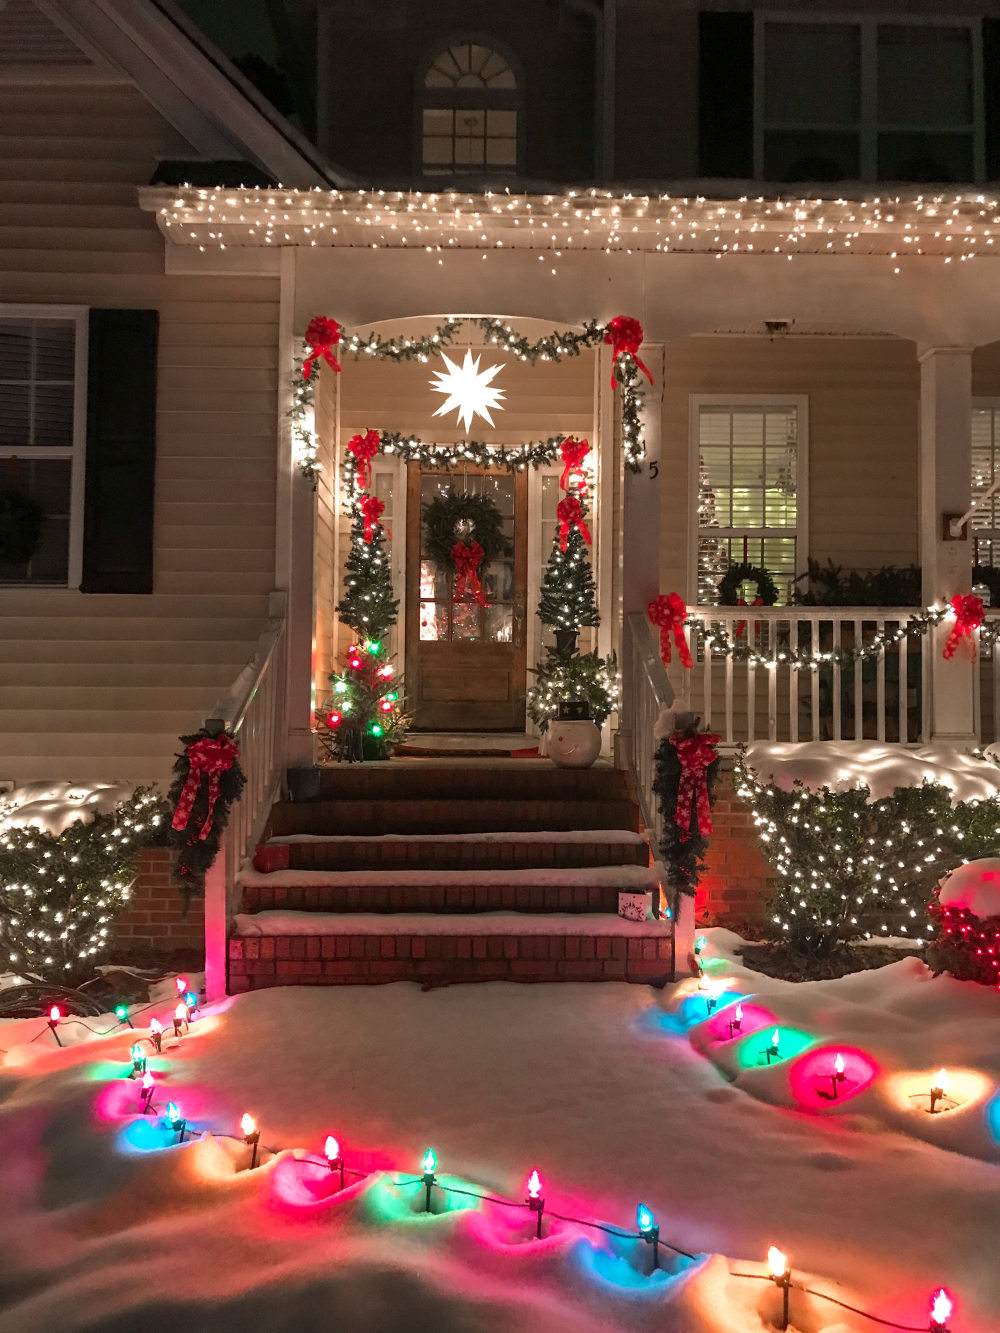 15 Fun & Festive Christmas Porch Ideas - Modern Glam - Holidays - 15 Fun & Festive Christmas Porch Ideas - Modern Glam - Holidays -   18 christmas decorations outdoor ideas